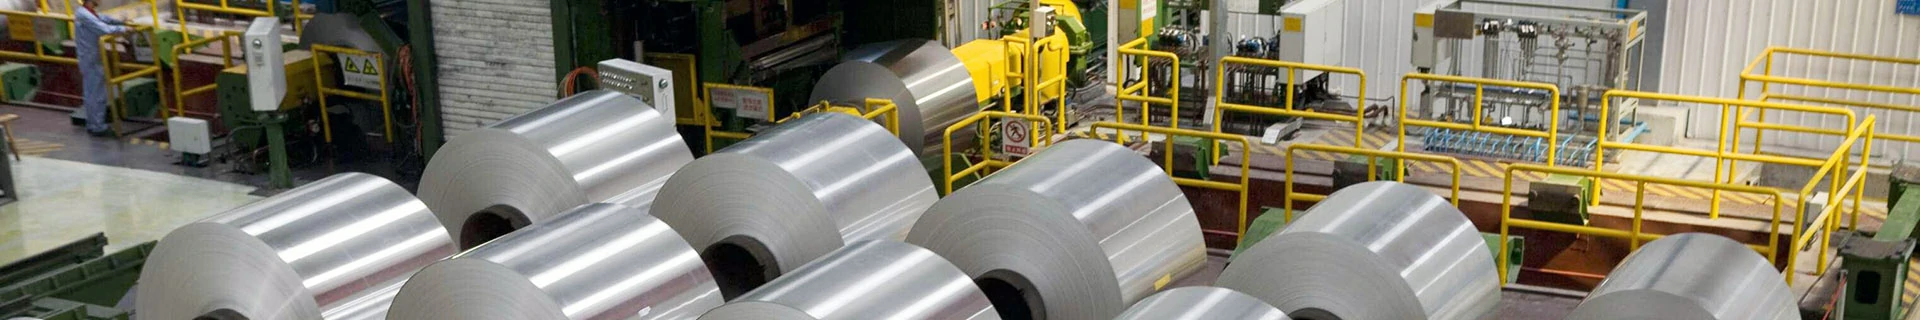 Aluminium Mirror Finish Sheet Manufacturers, Buy at Factory Prices